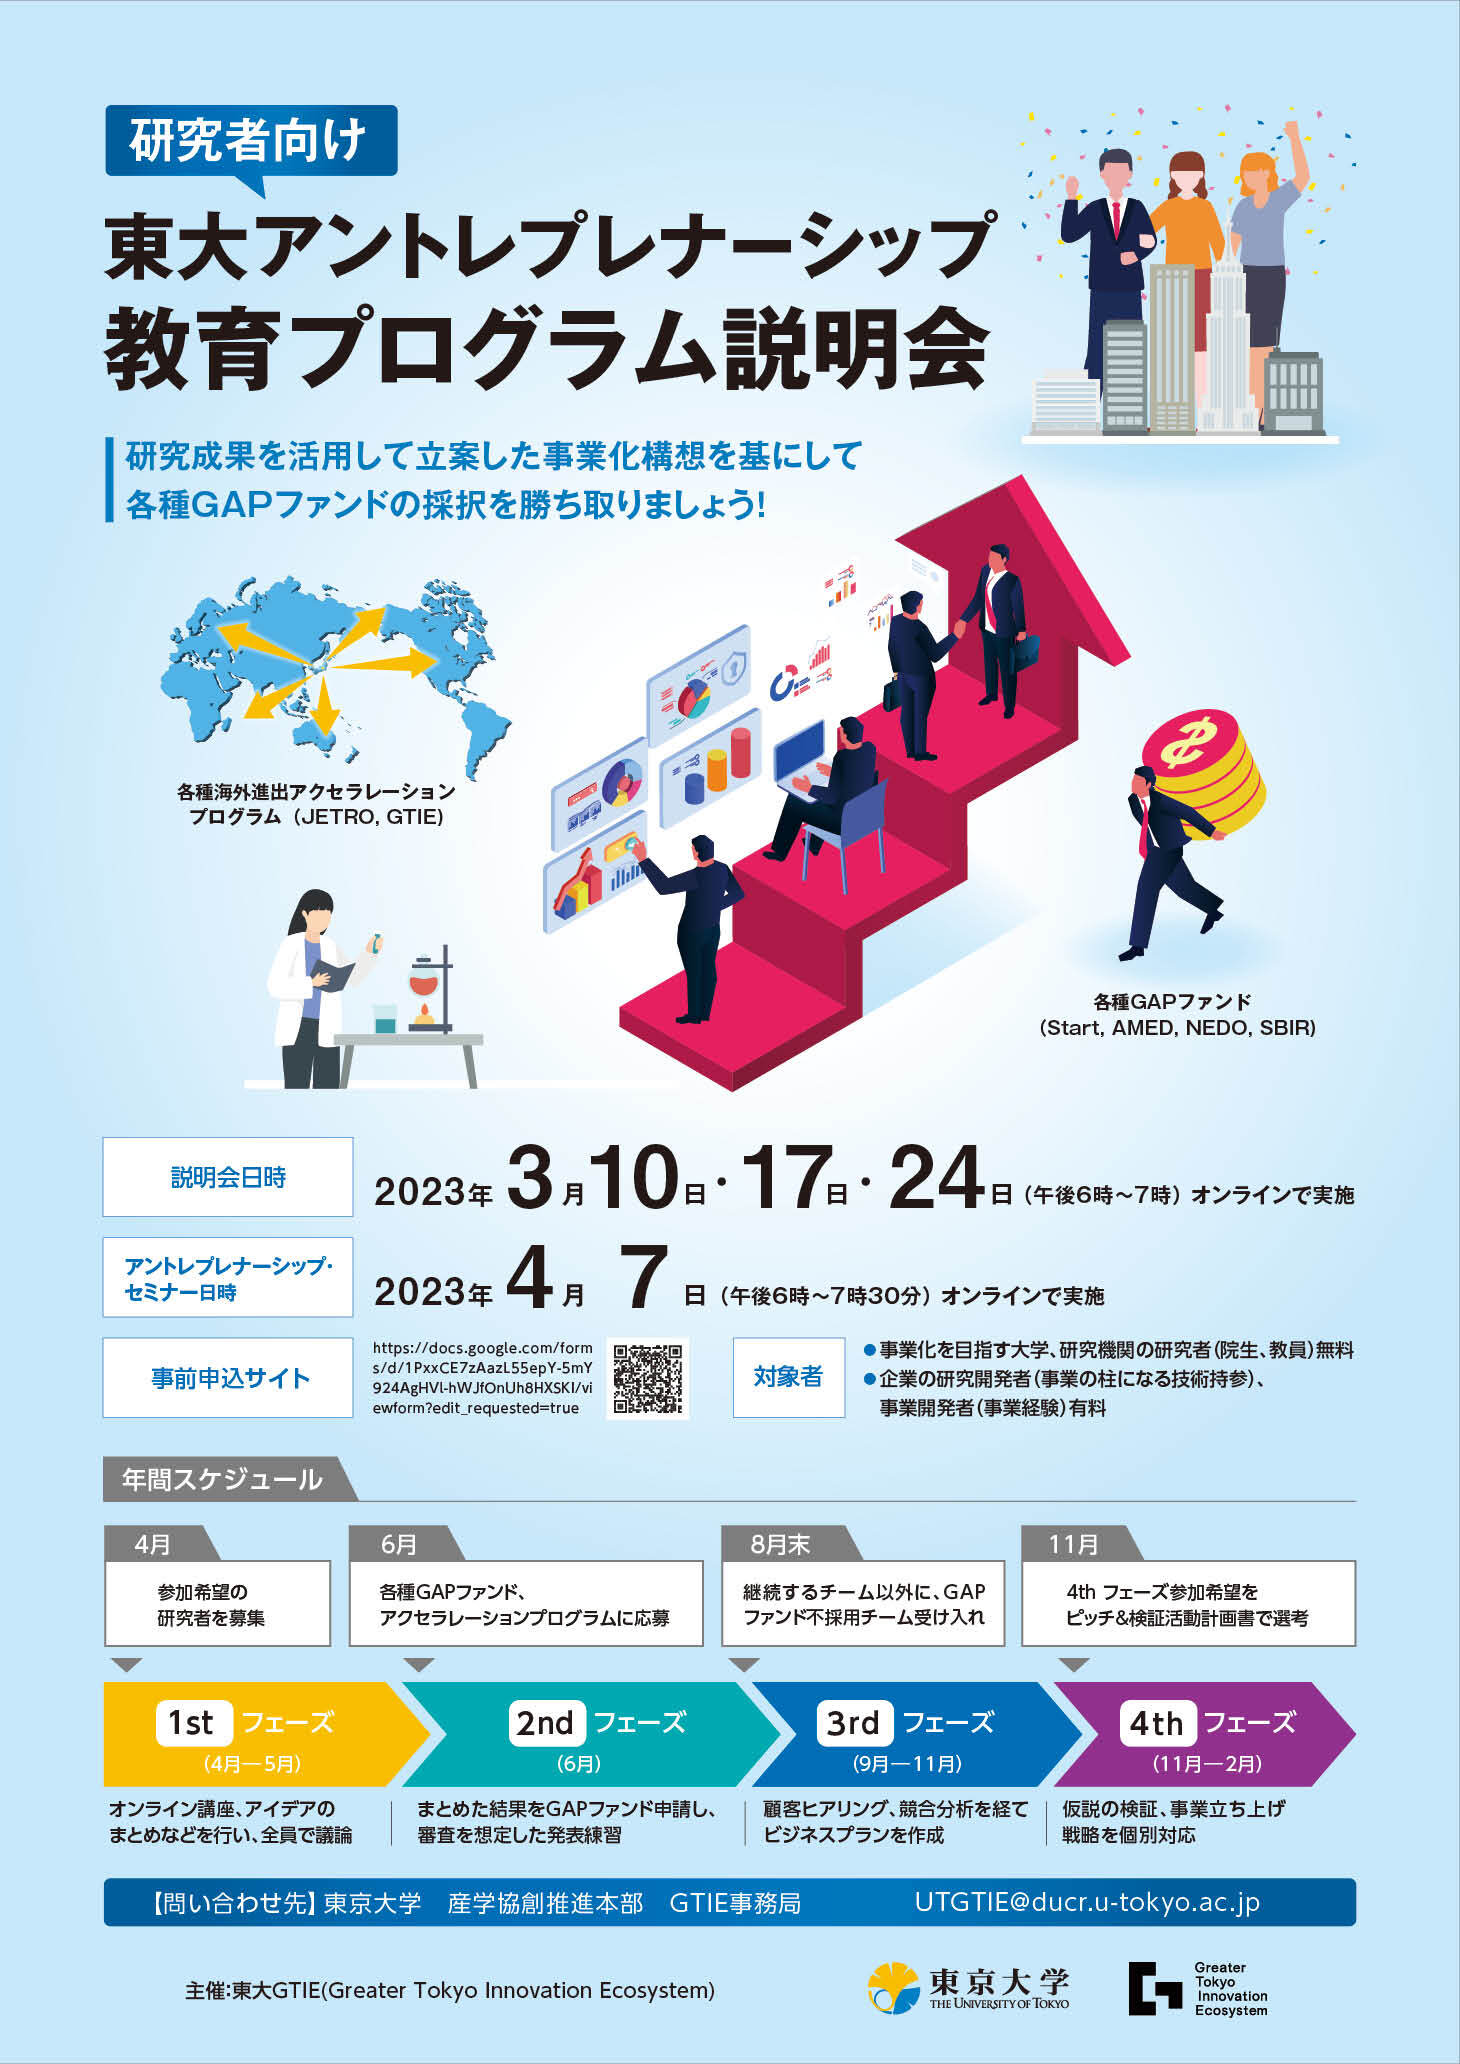 Information Session on the University of Tokyo GTIE Program